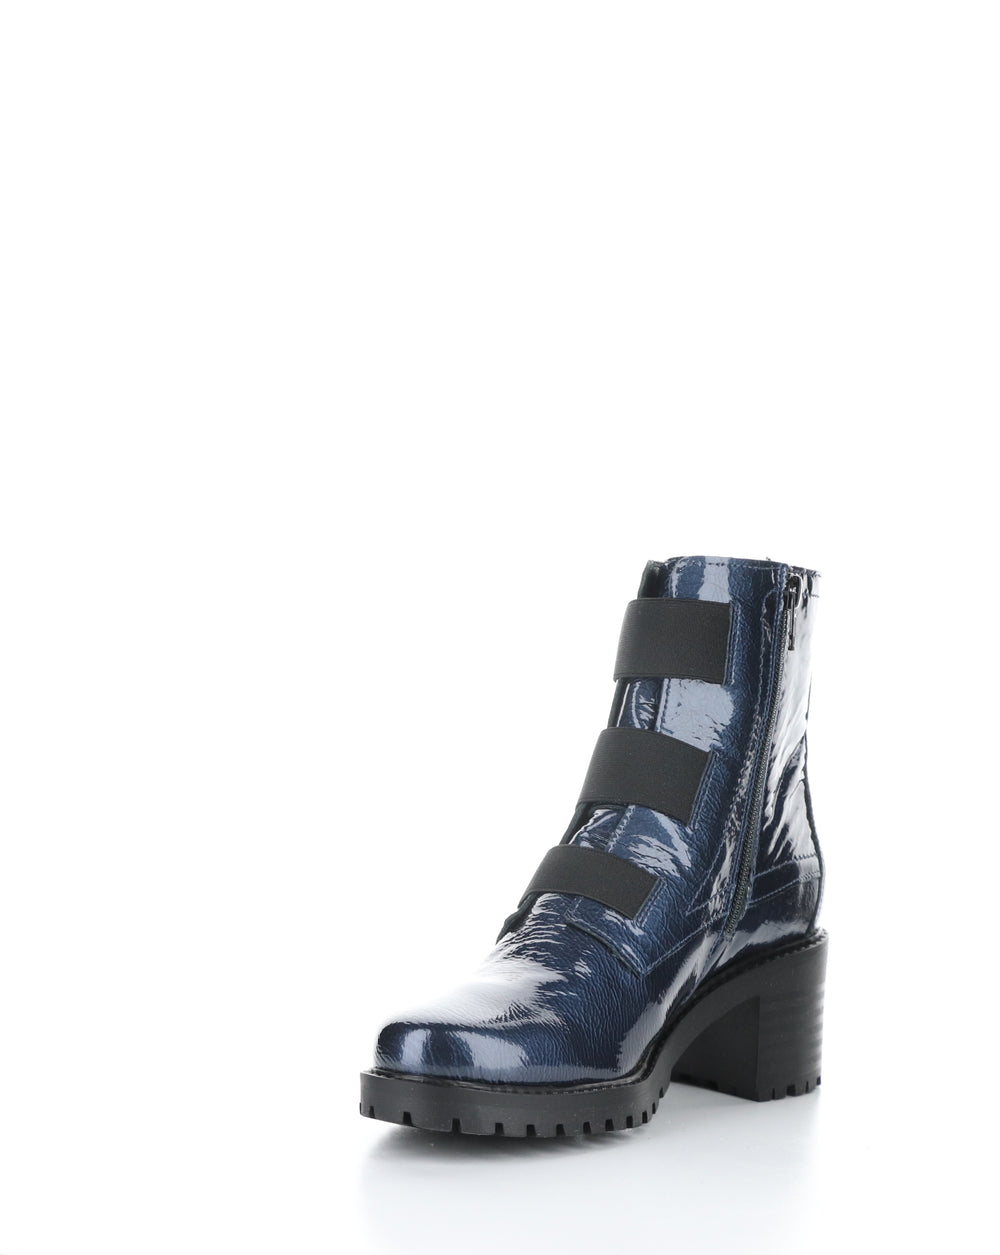 INDIE BLUE/BLACK Elasticated Boots